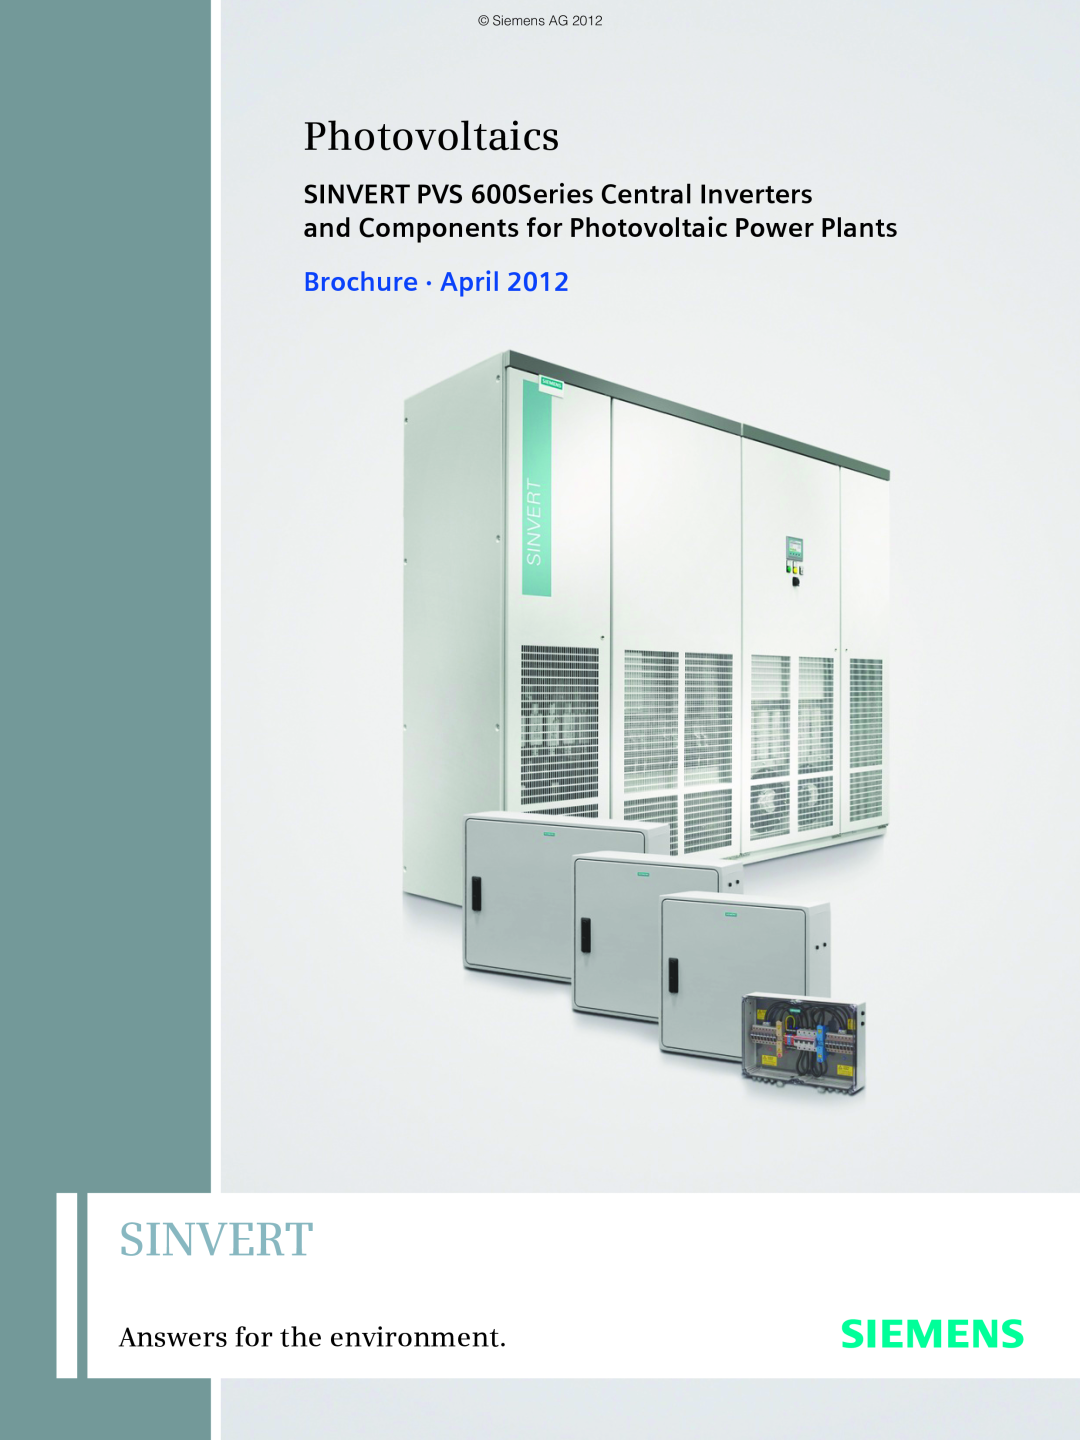 Siemens brochure Sinvert, Photovoltaics, SINVERT PVS 600Series Central Inverters, Answers for the environment 